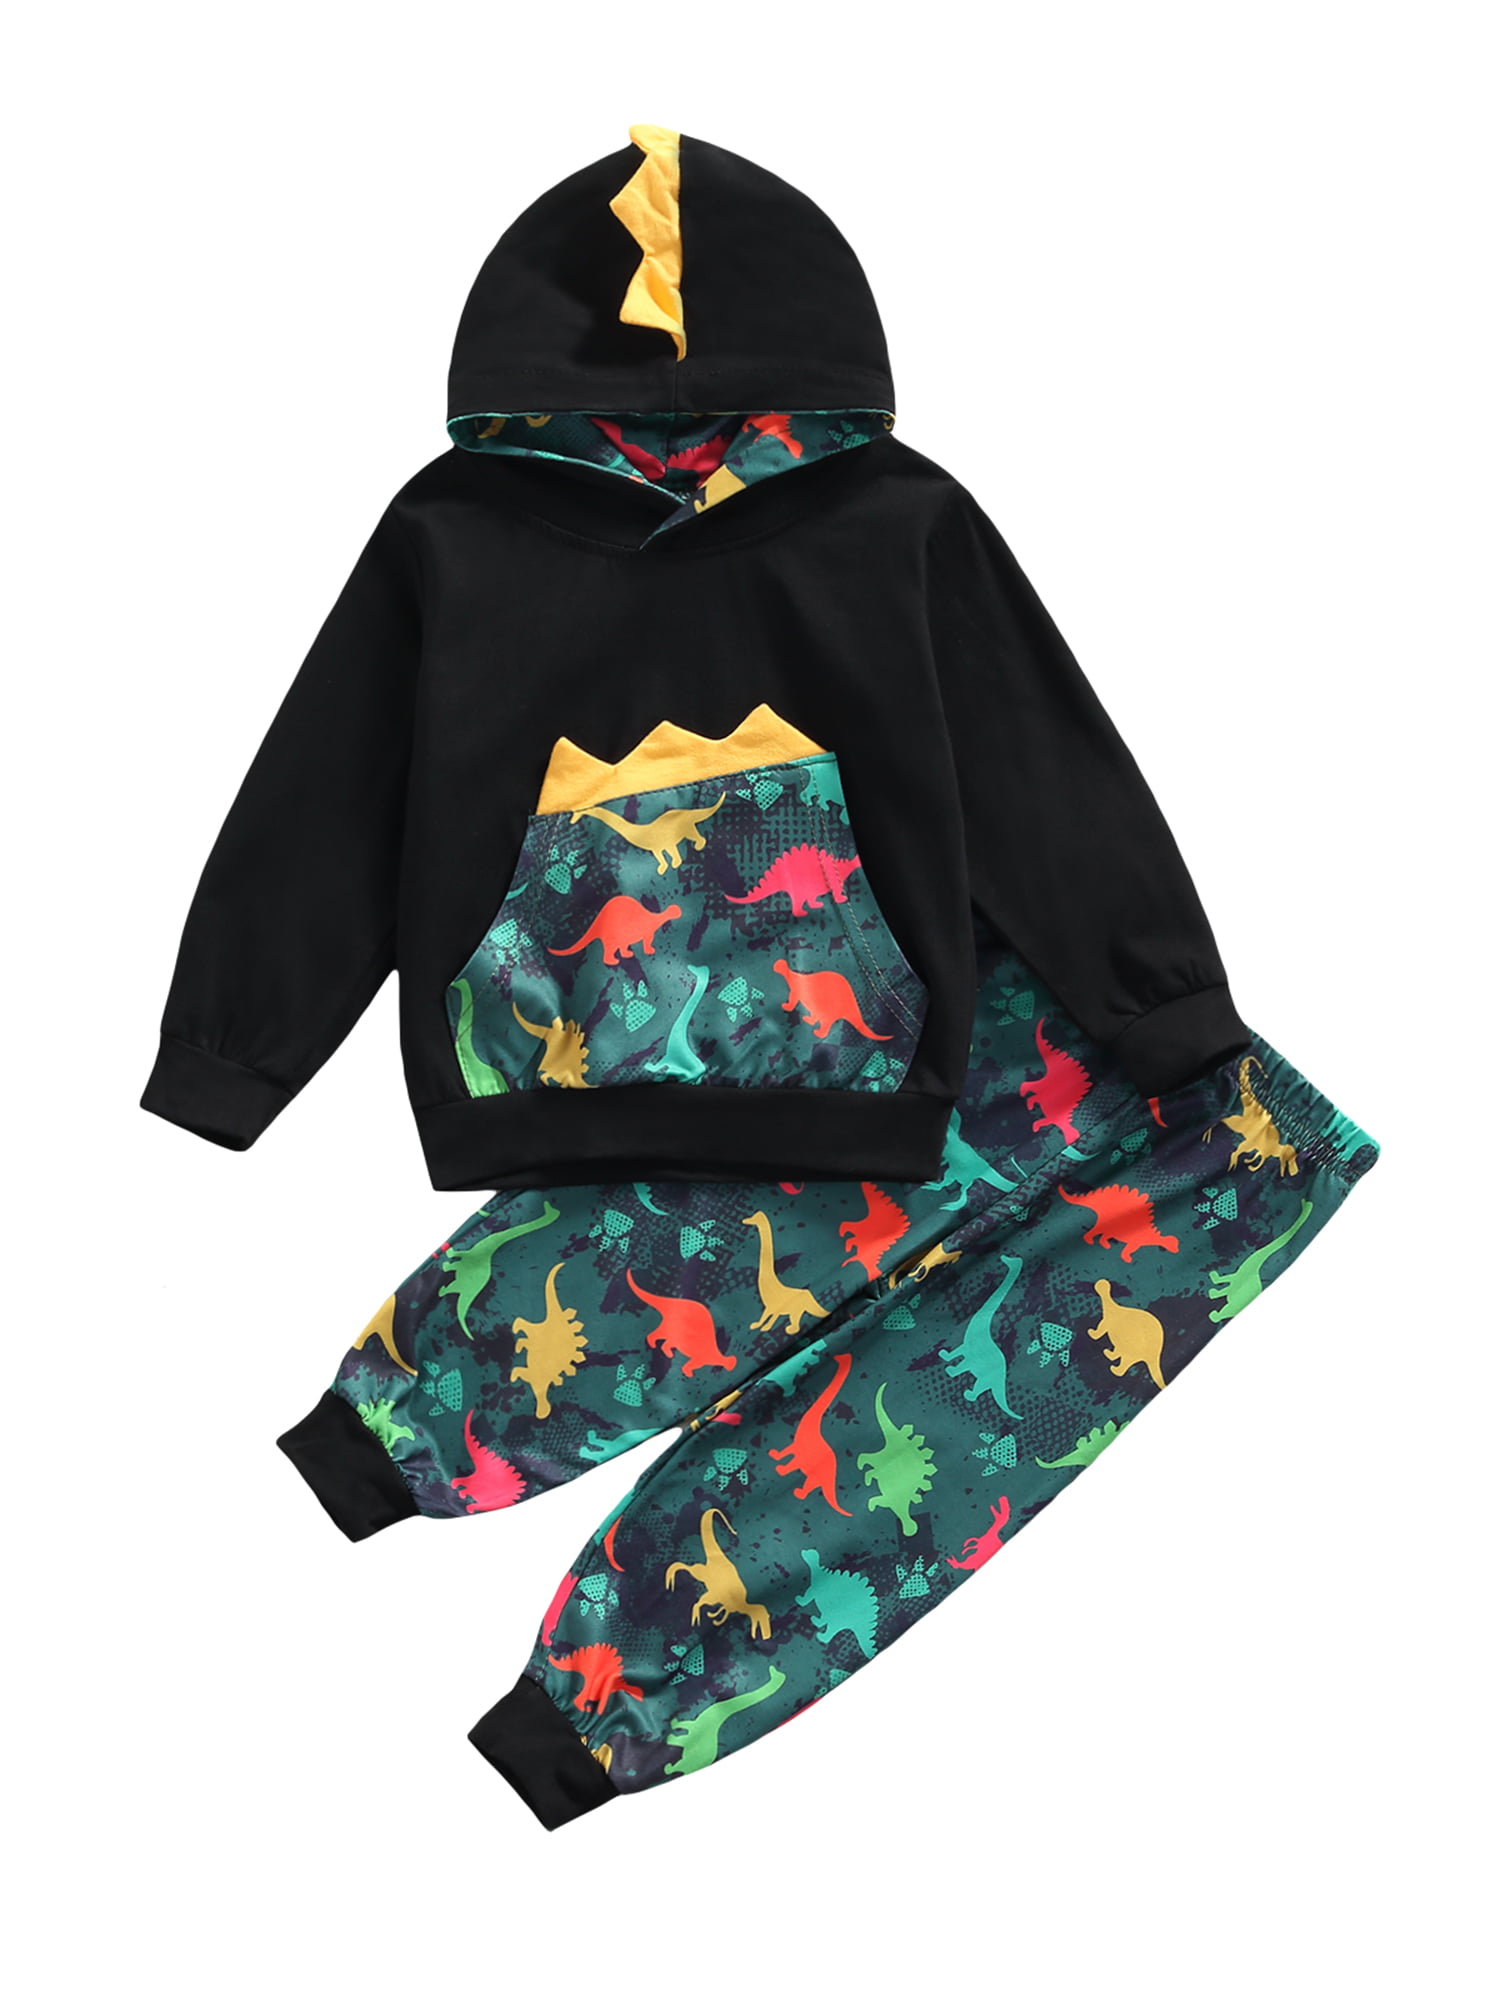 Details about    A Giant Ape Baby Kids Camo Shark Infant Summer Jumpsuit Bodysuit Outfit Set 